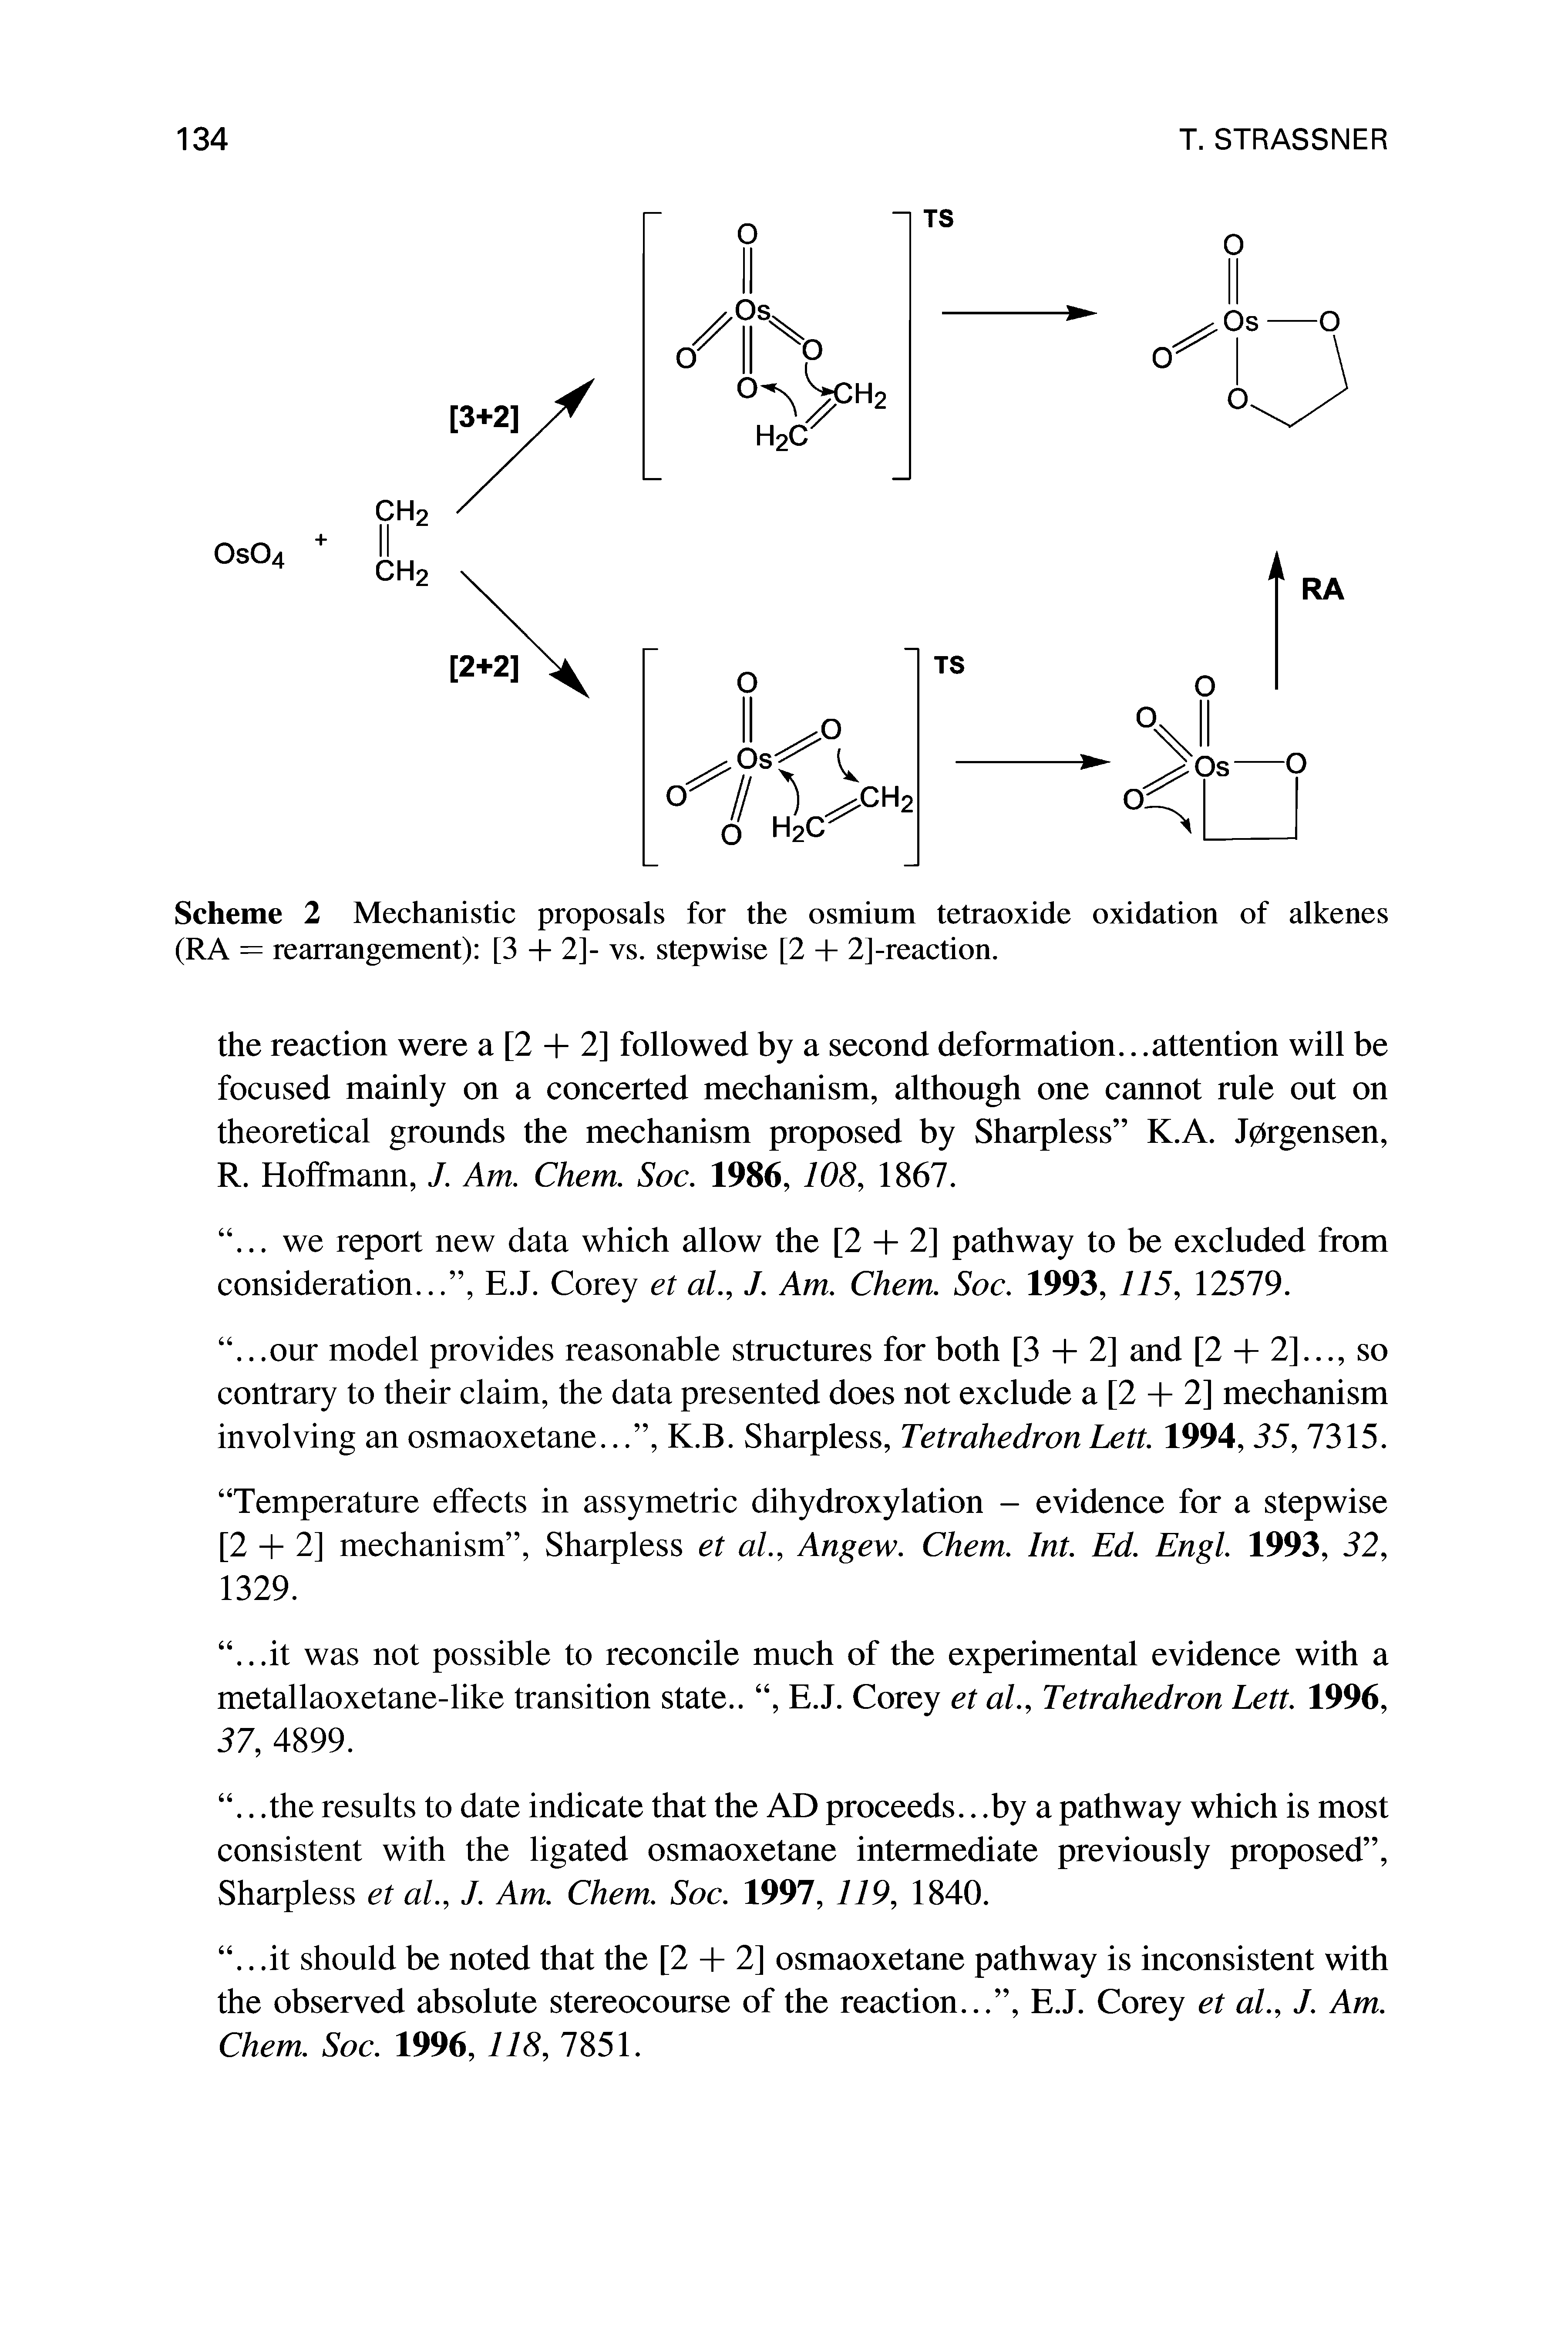 Scheme 2 Mechanistic proposals for the osmium tetraoxide oxidation of alkenes (RA = rearrangement) [3 + 2]- vs. stepwise [2 + 2]-reaction.